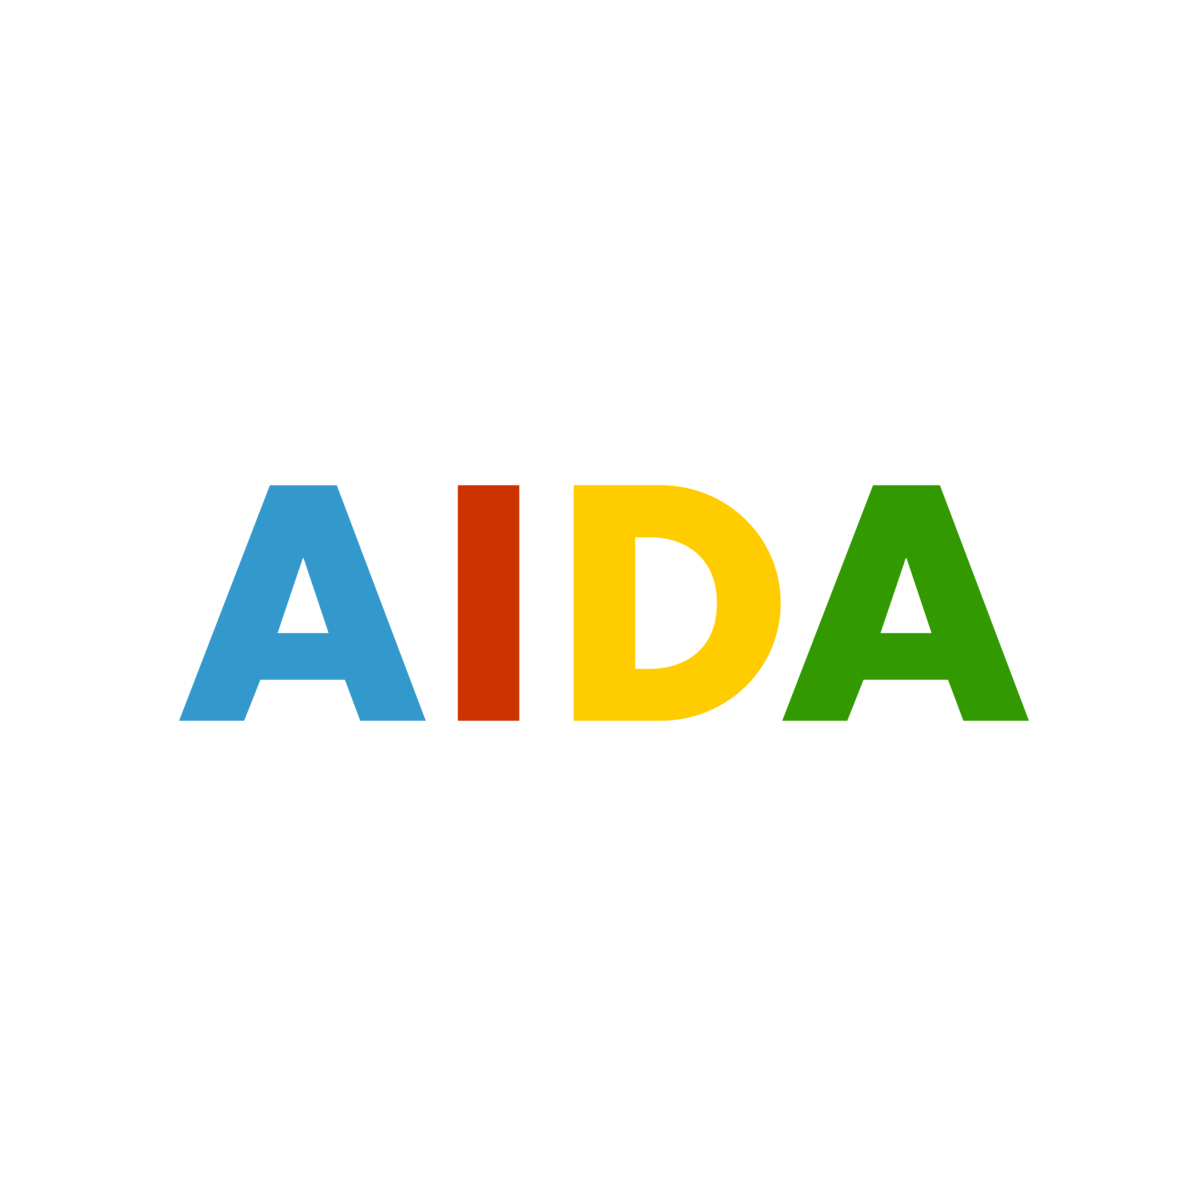 aida cruises logo